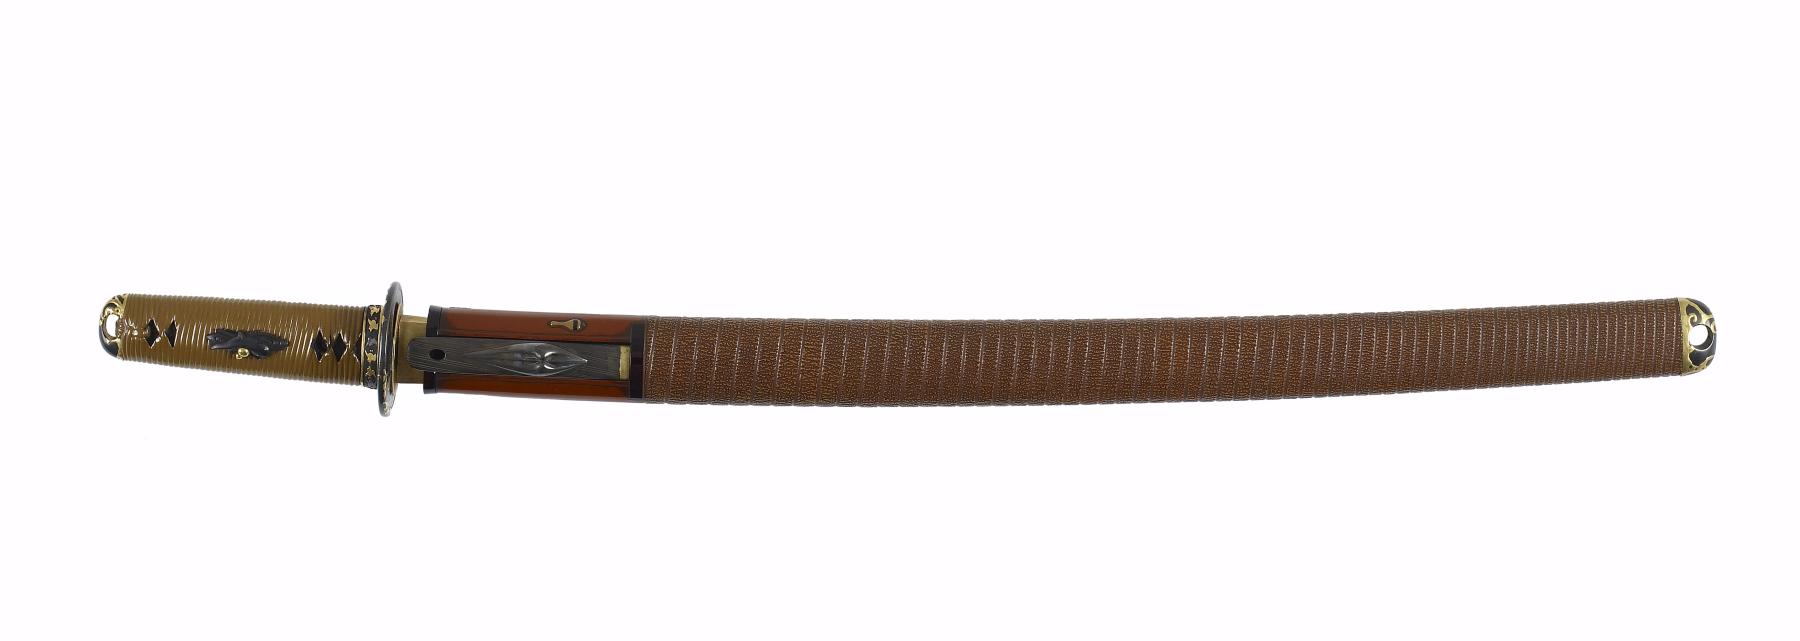 Image for Mounted short sword (wakizashi) (includes 51.1145.1-51.1145.5)